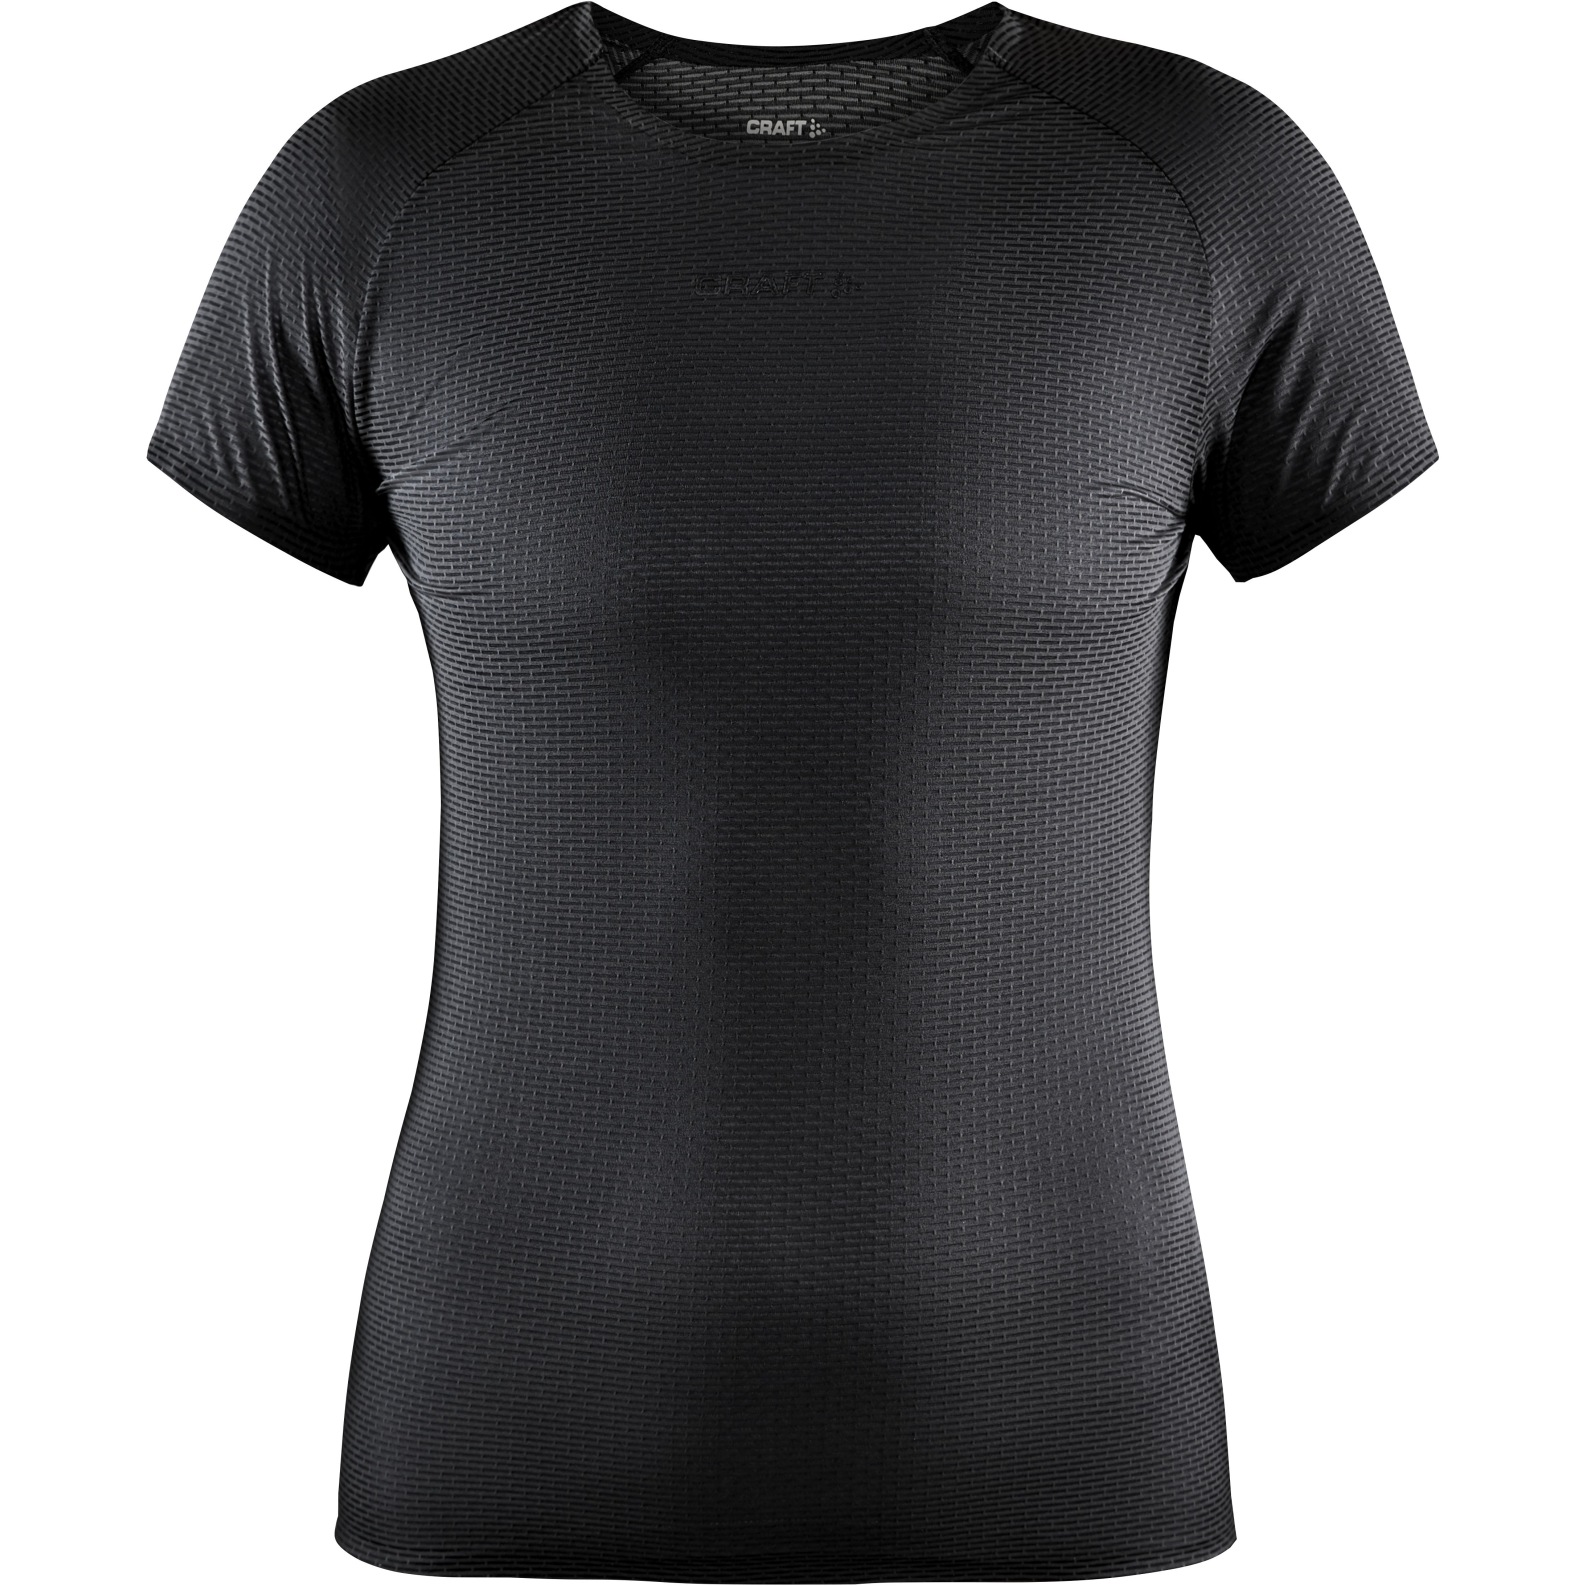 Productfoto van CRAFT Nanoweight Shirt Dames - Black